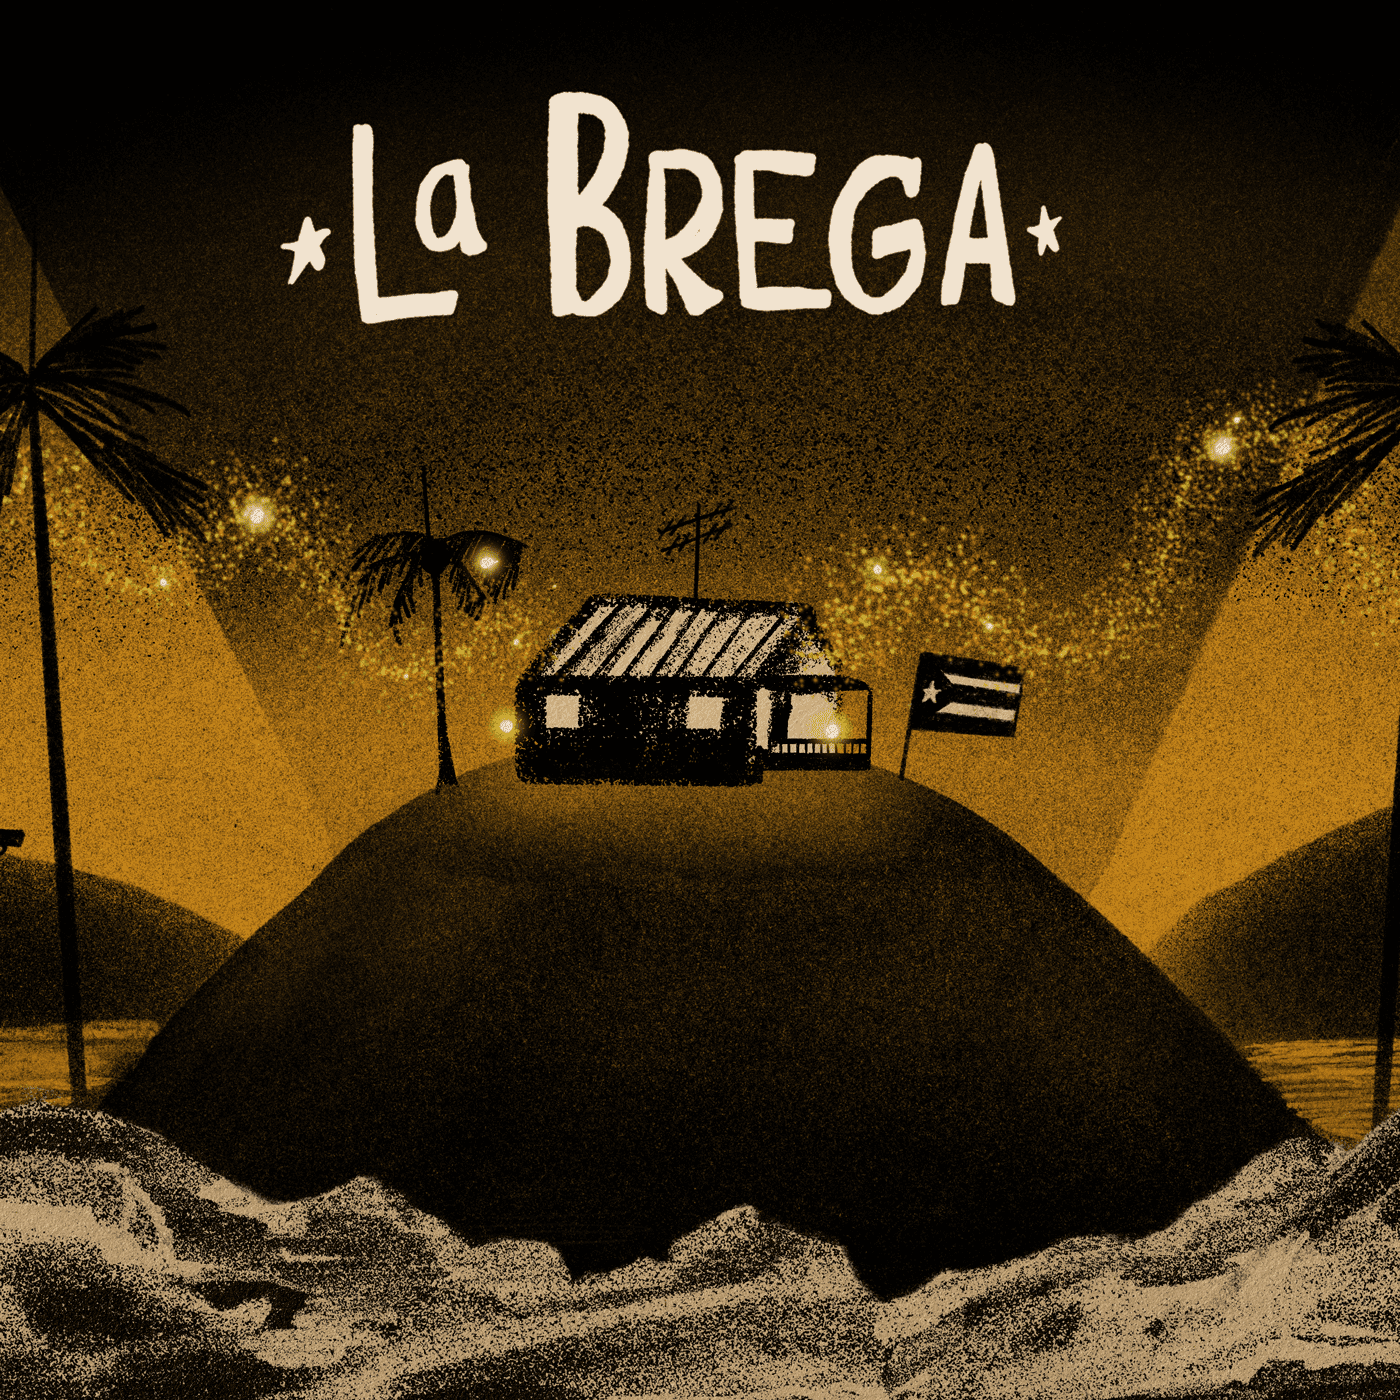 'La Brega' Explores the Puerto Rican Experience Through Music